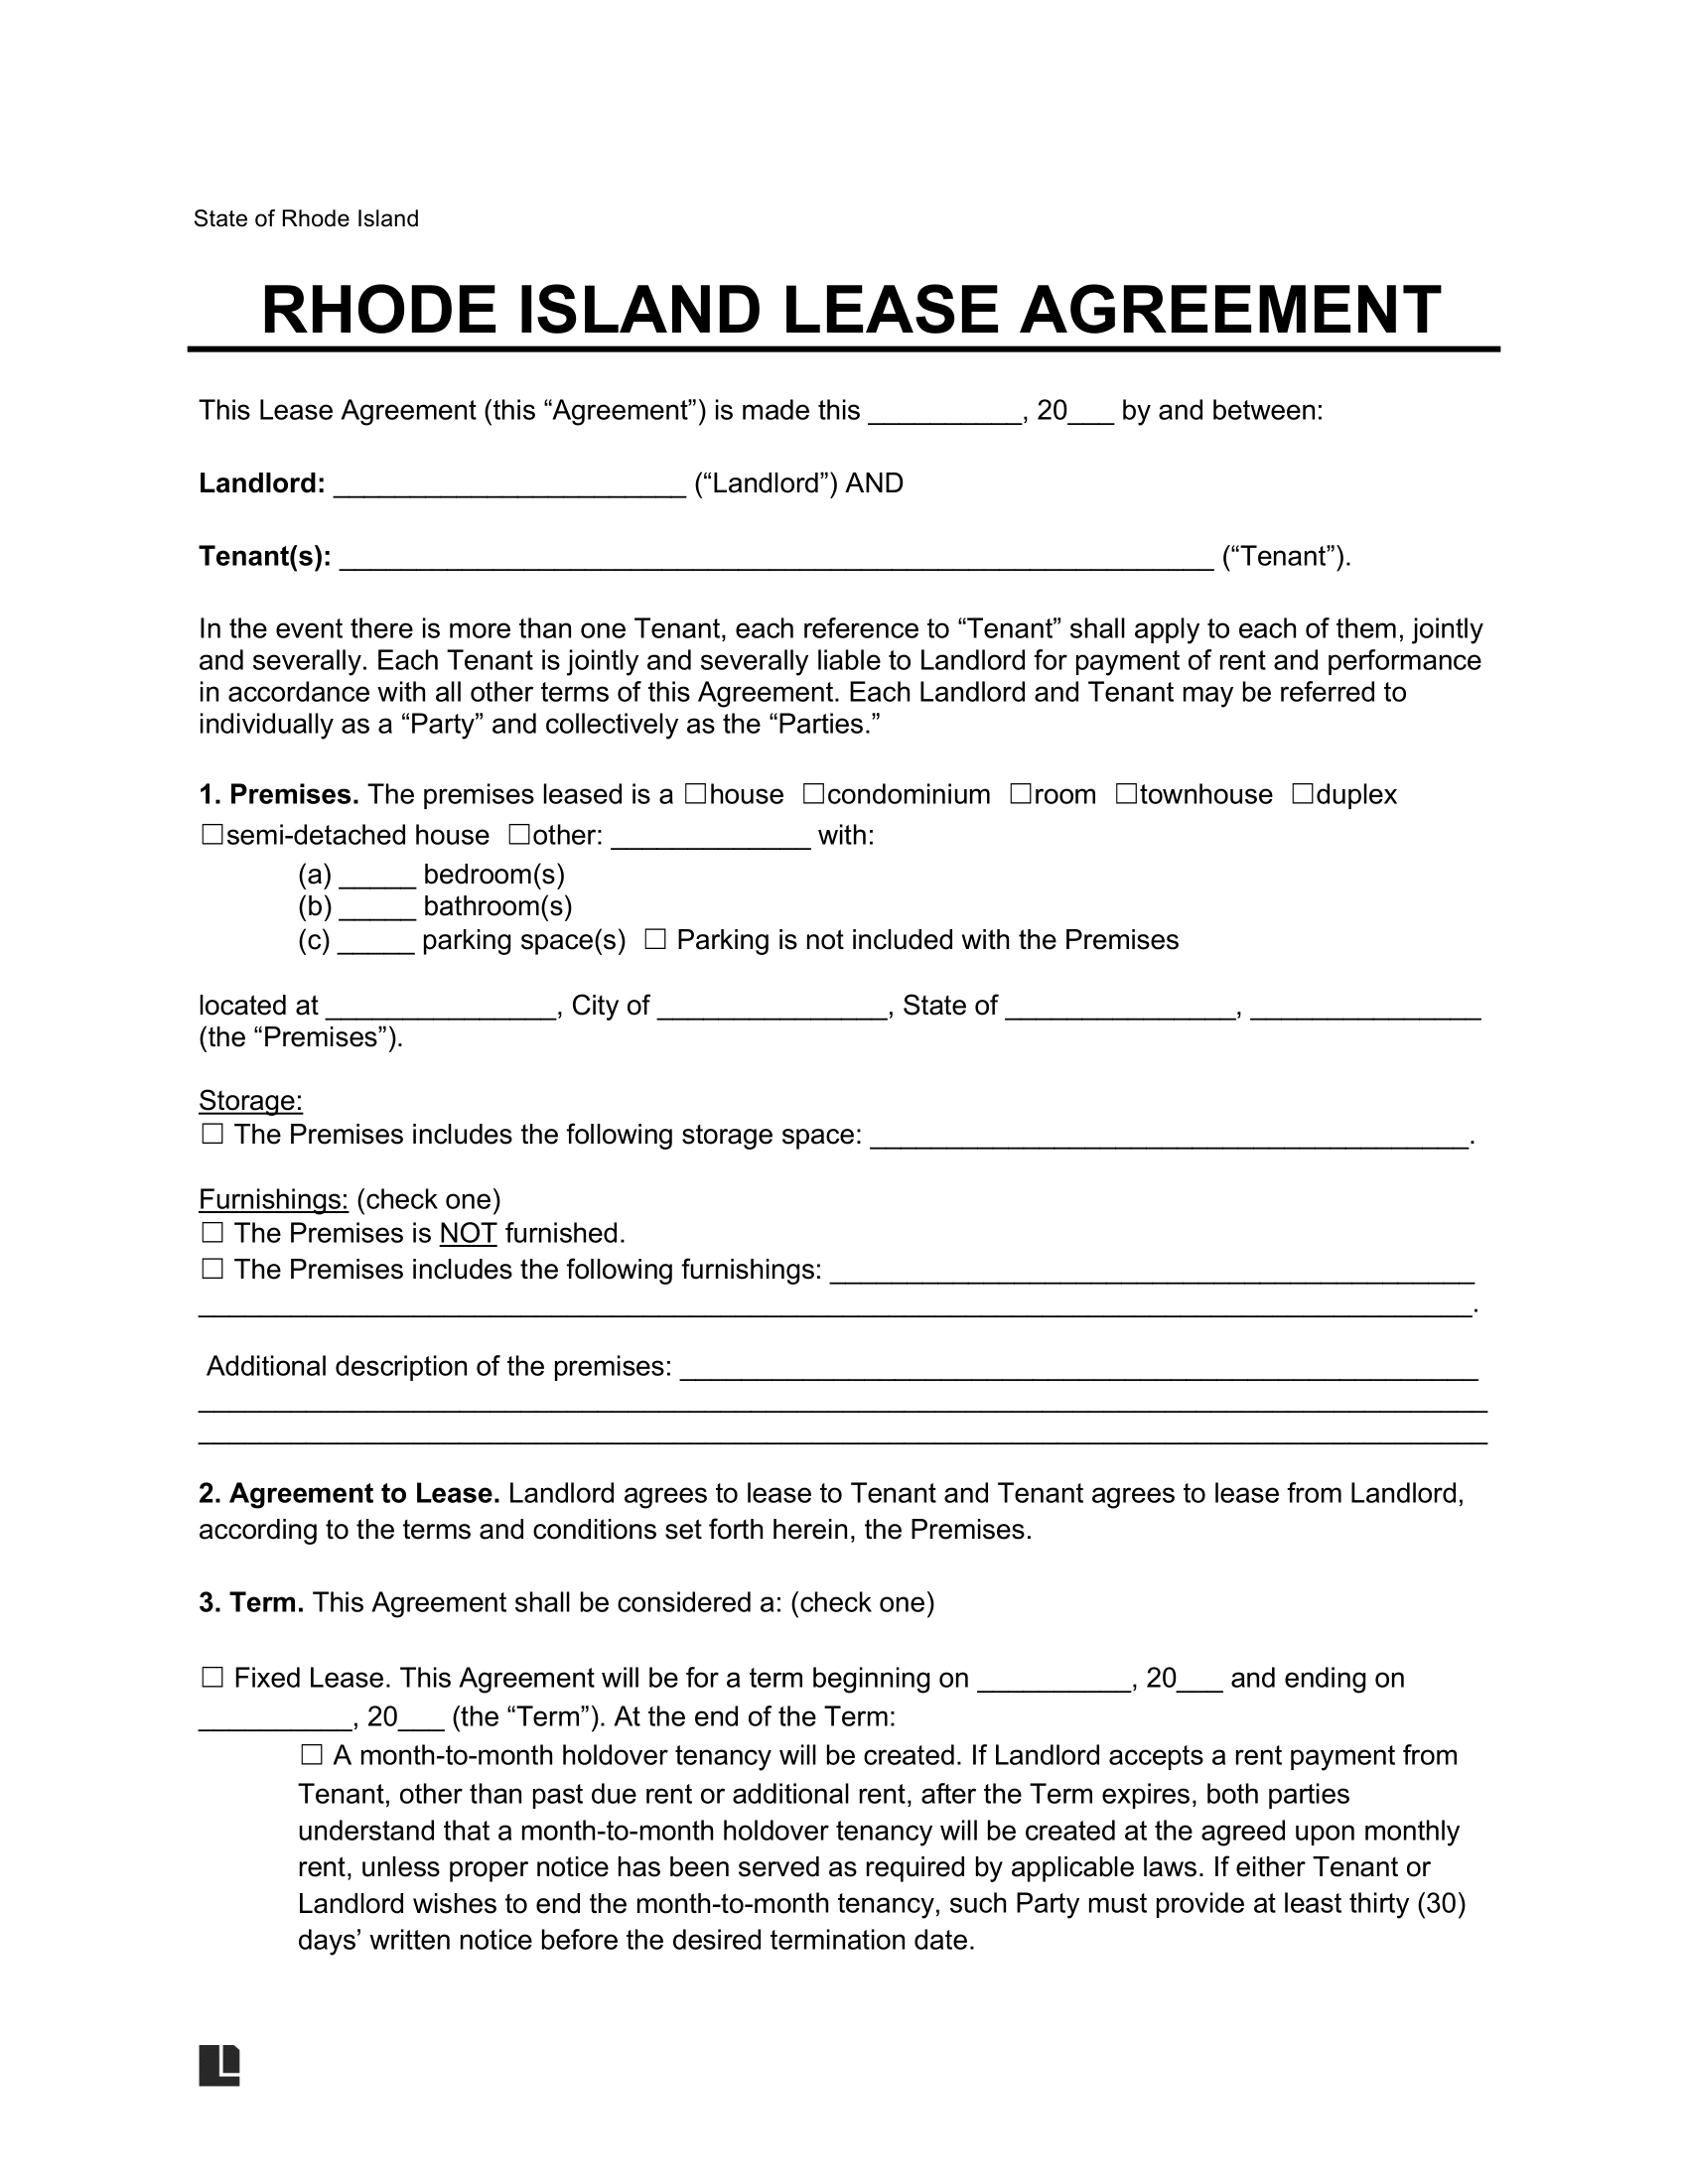 Rhode Island Standard Residential Lease Agreement